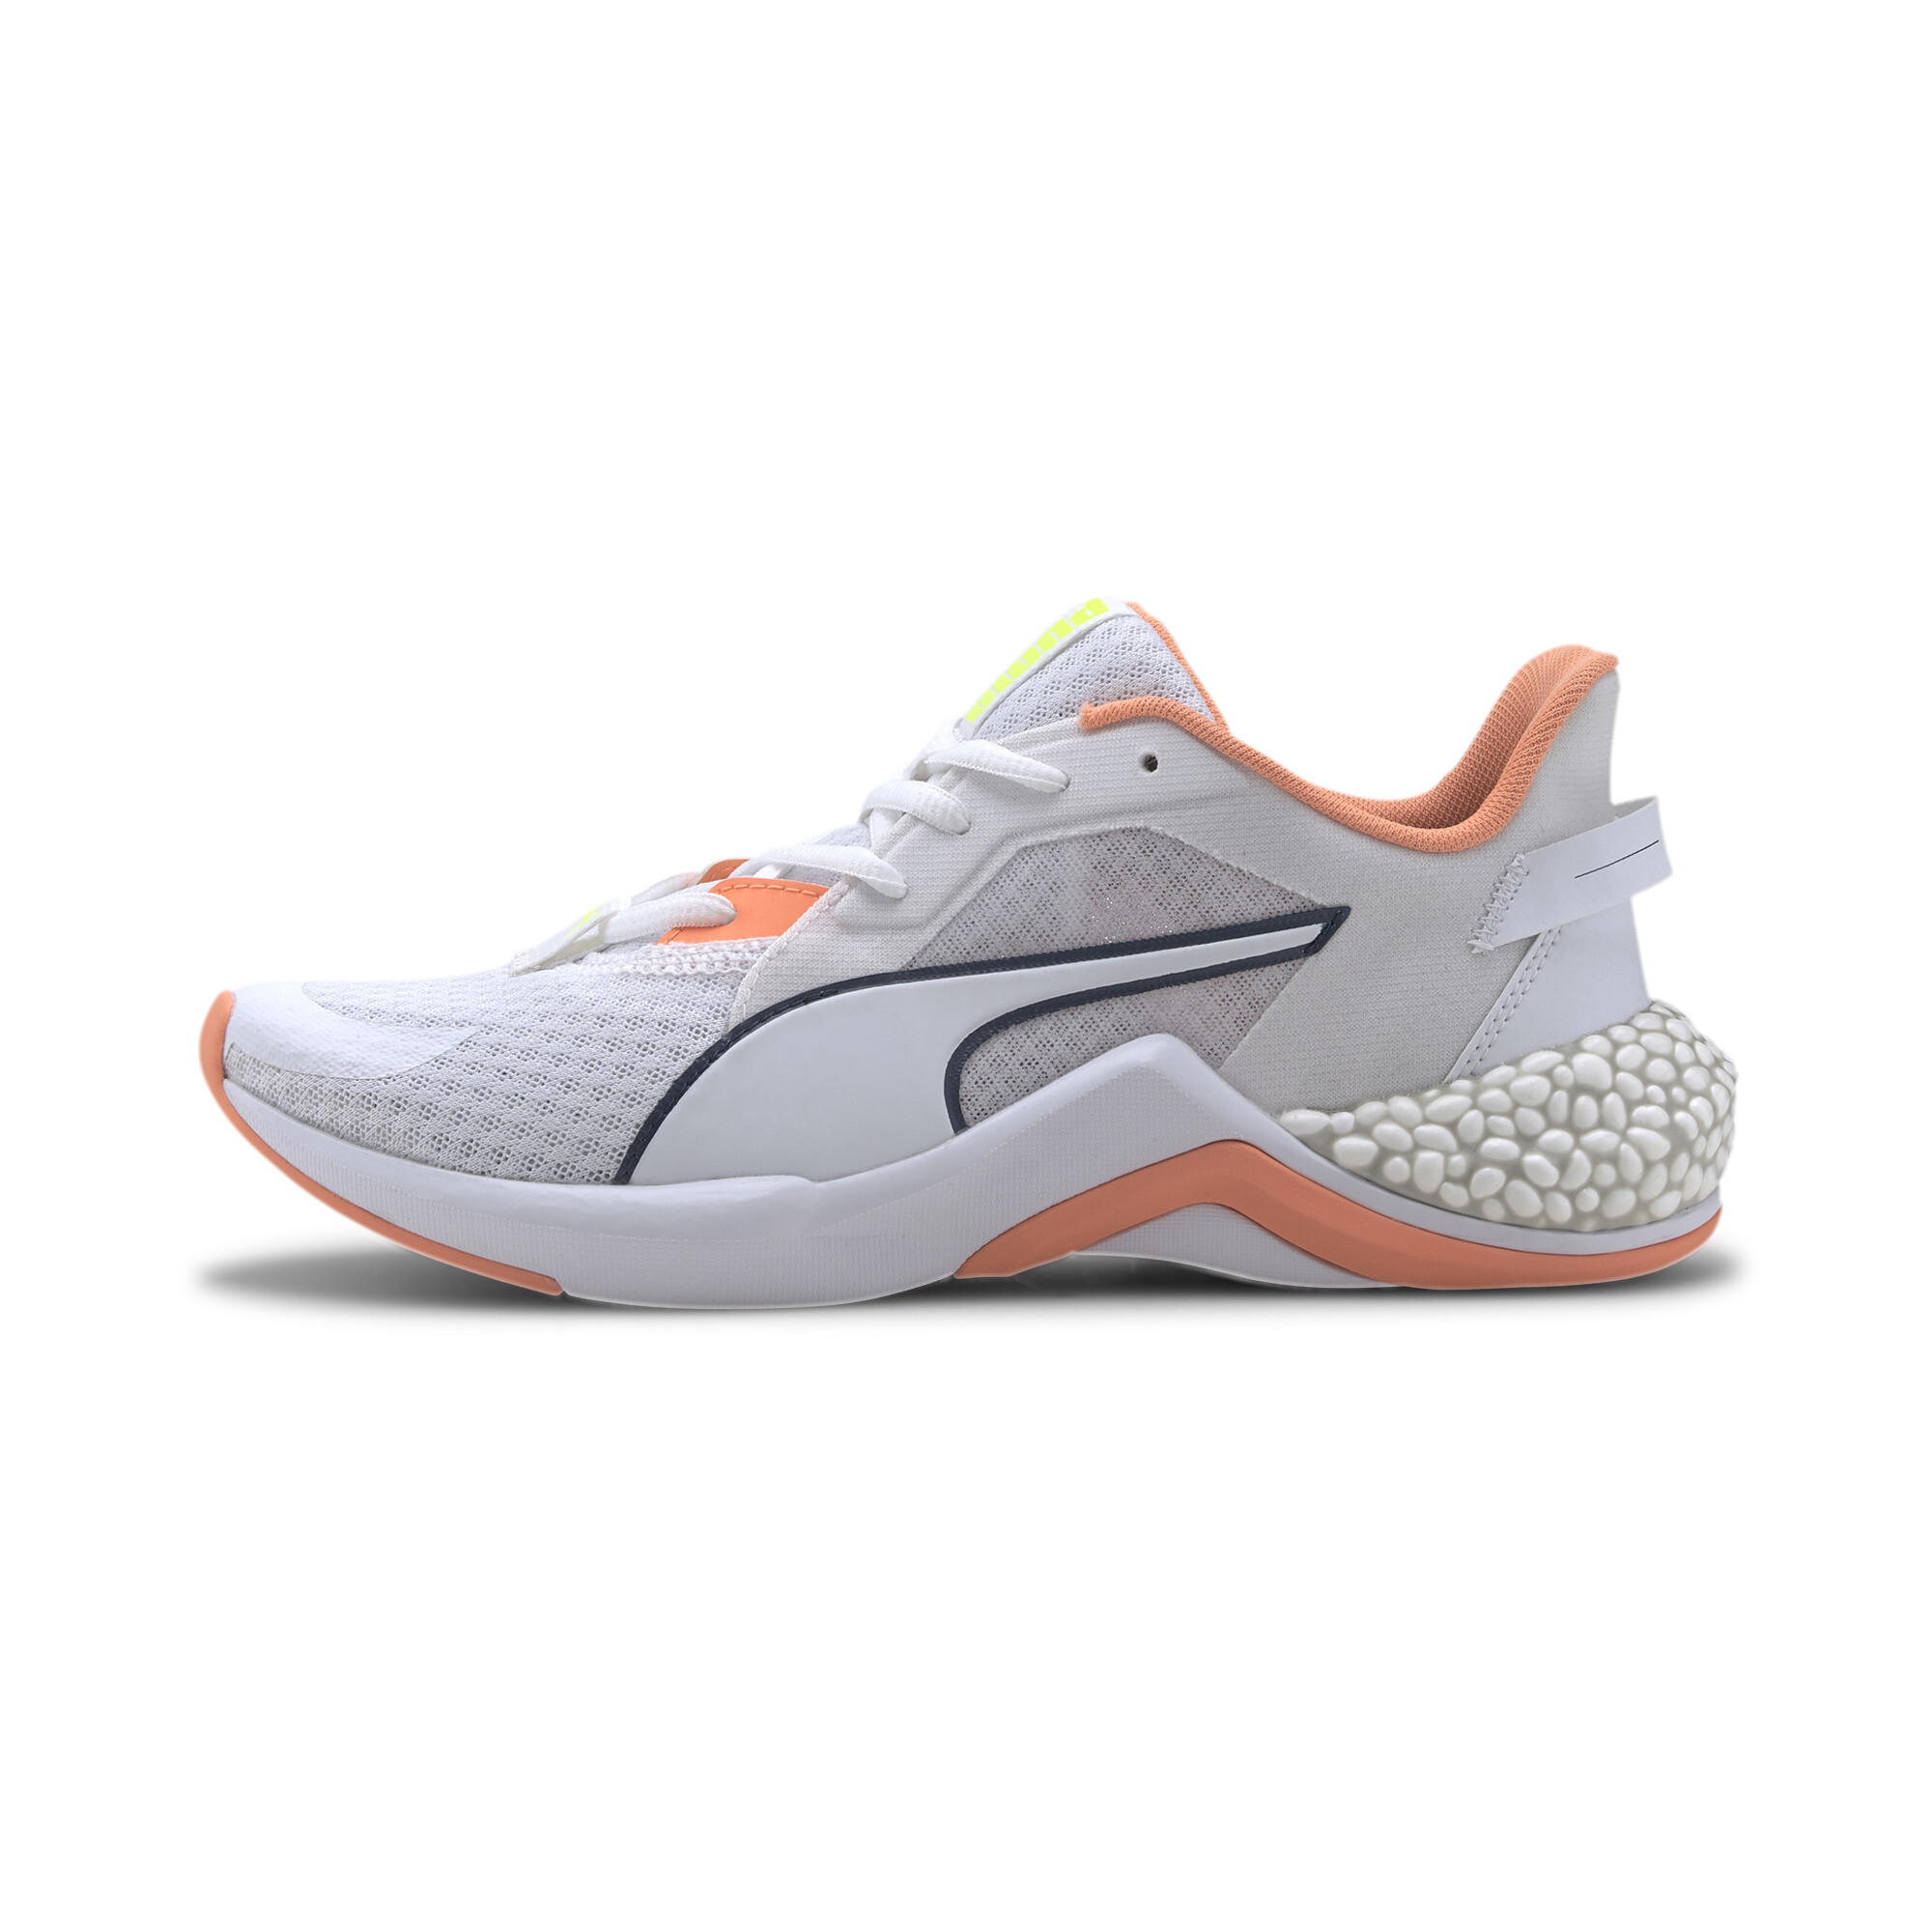 PUMA Women's HYBRID NX Ozone Running Shoes | eBay